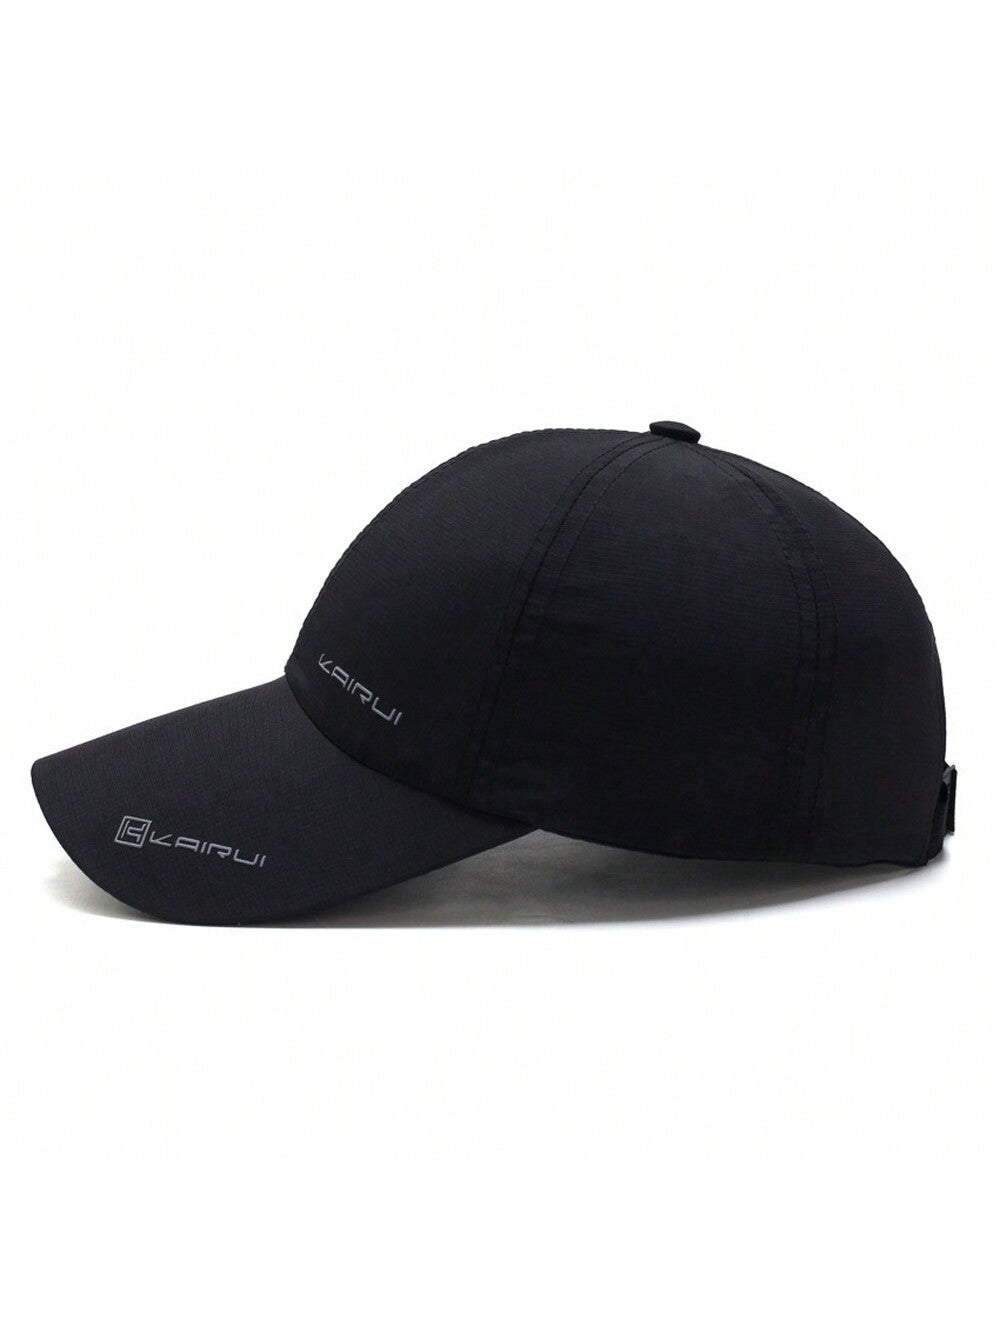 Men's Black Baseball Lightweight Quick-drying Outdoor Sun Protection Cap Hat 💜